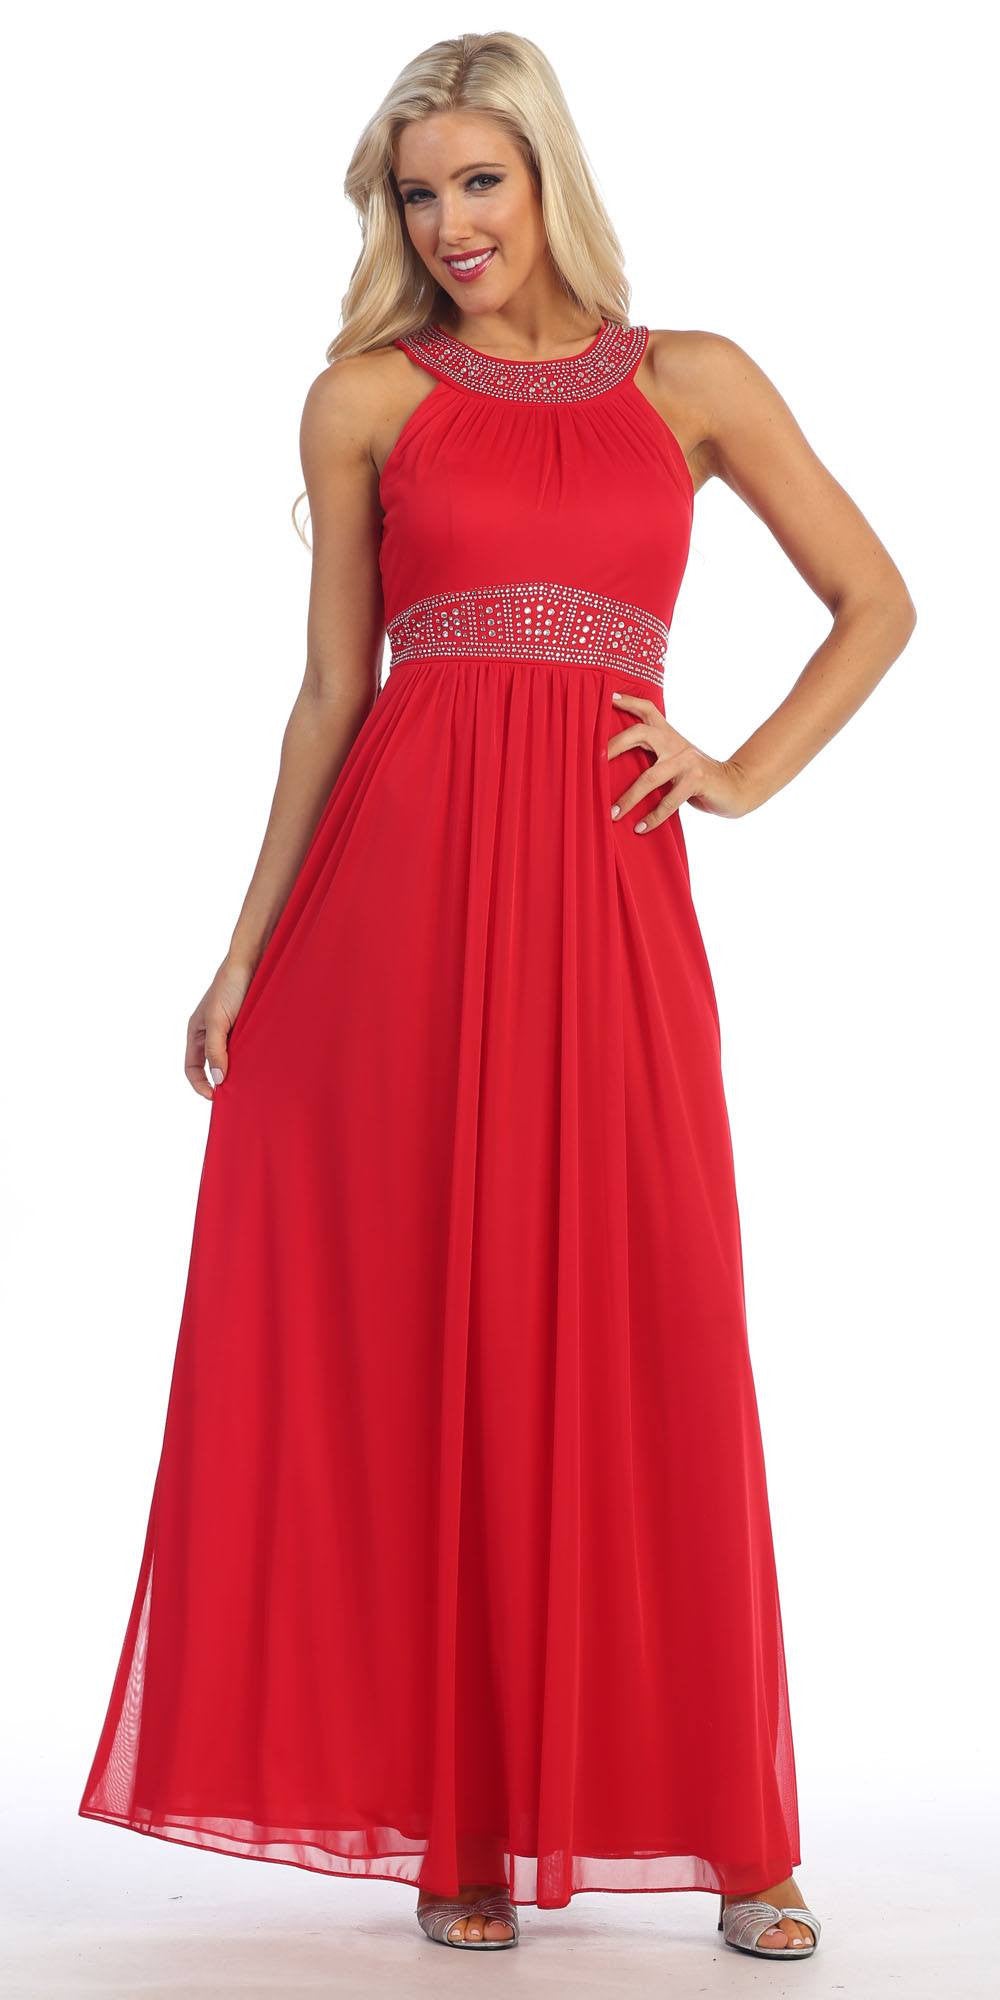 Red Empire Waist A Line Long Formal Dress Beaded Neckline And Waist Discountdressshop 